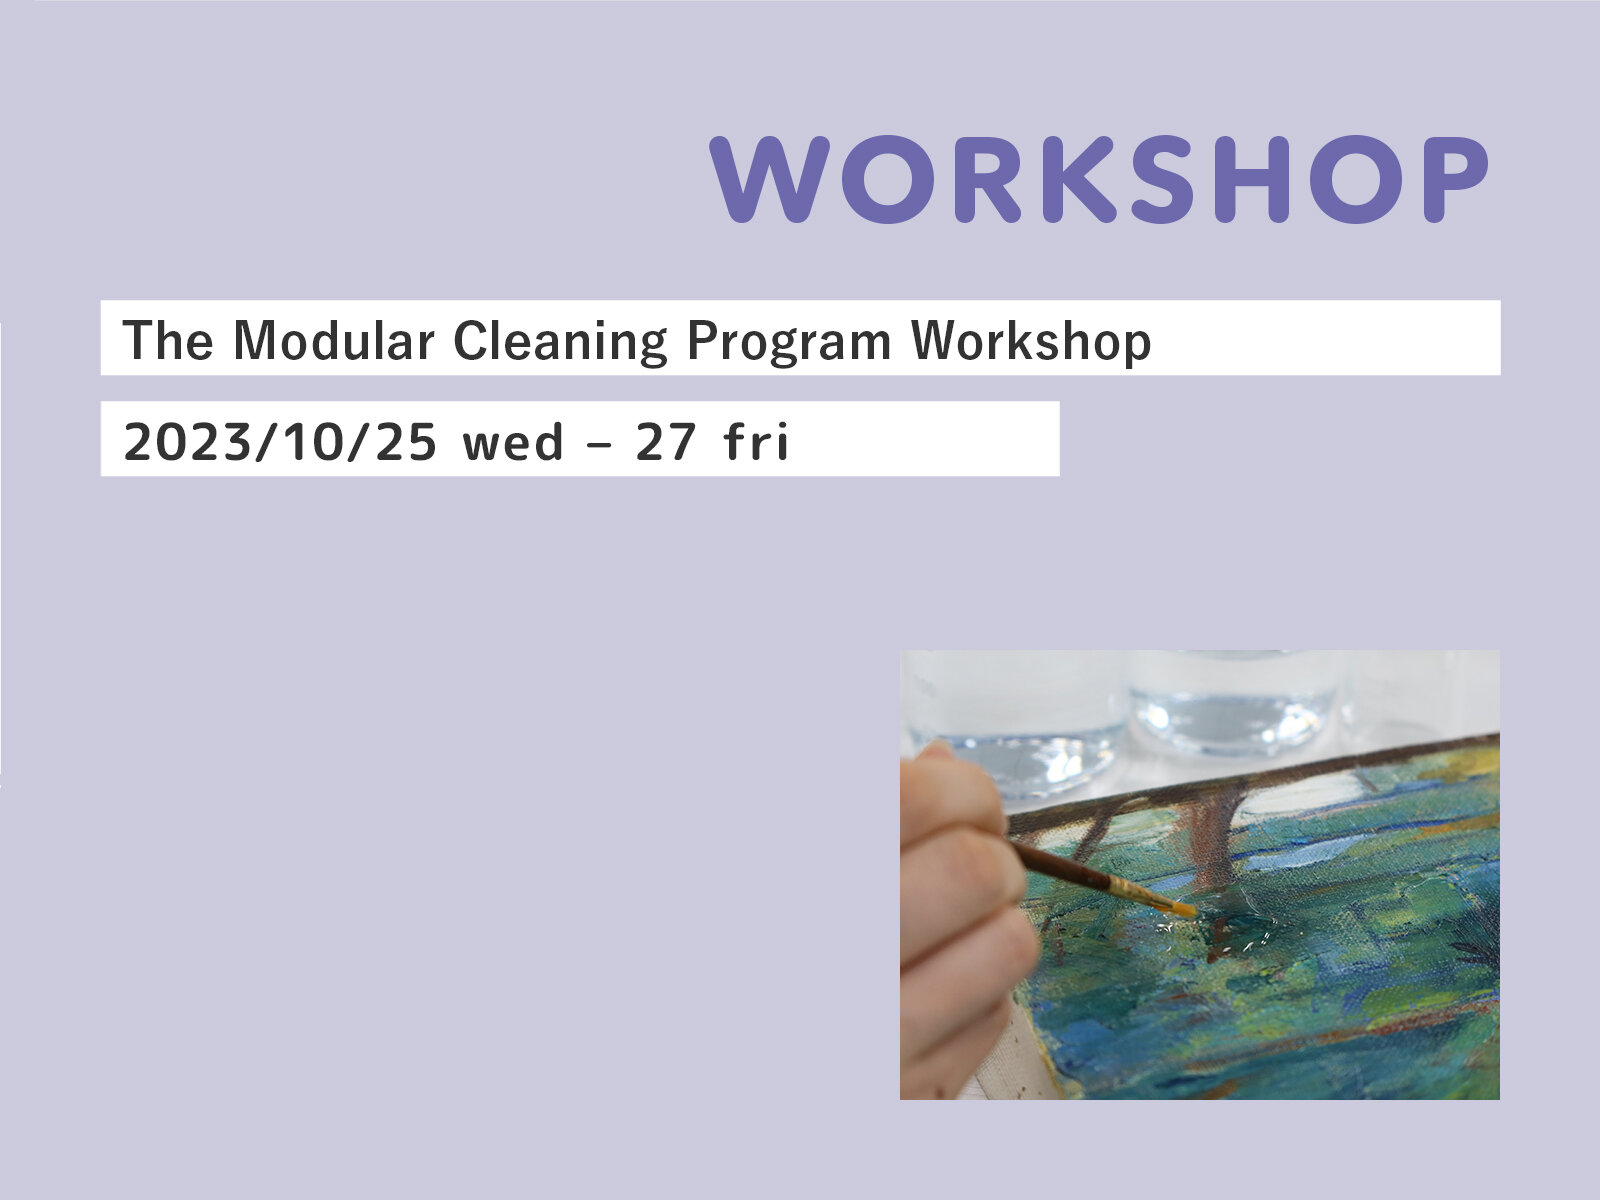 The Modular Cleaning Program Workshop

